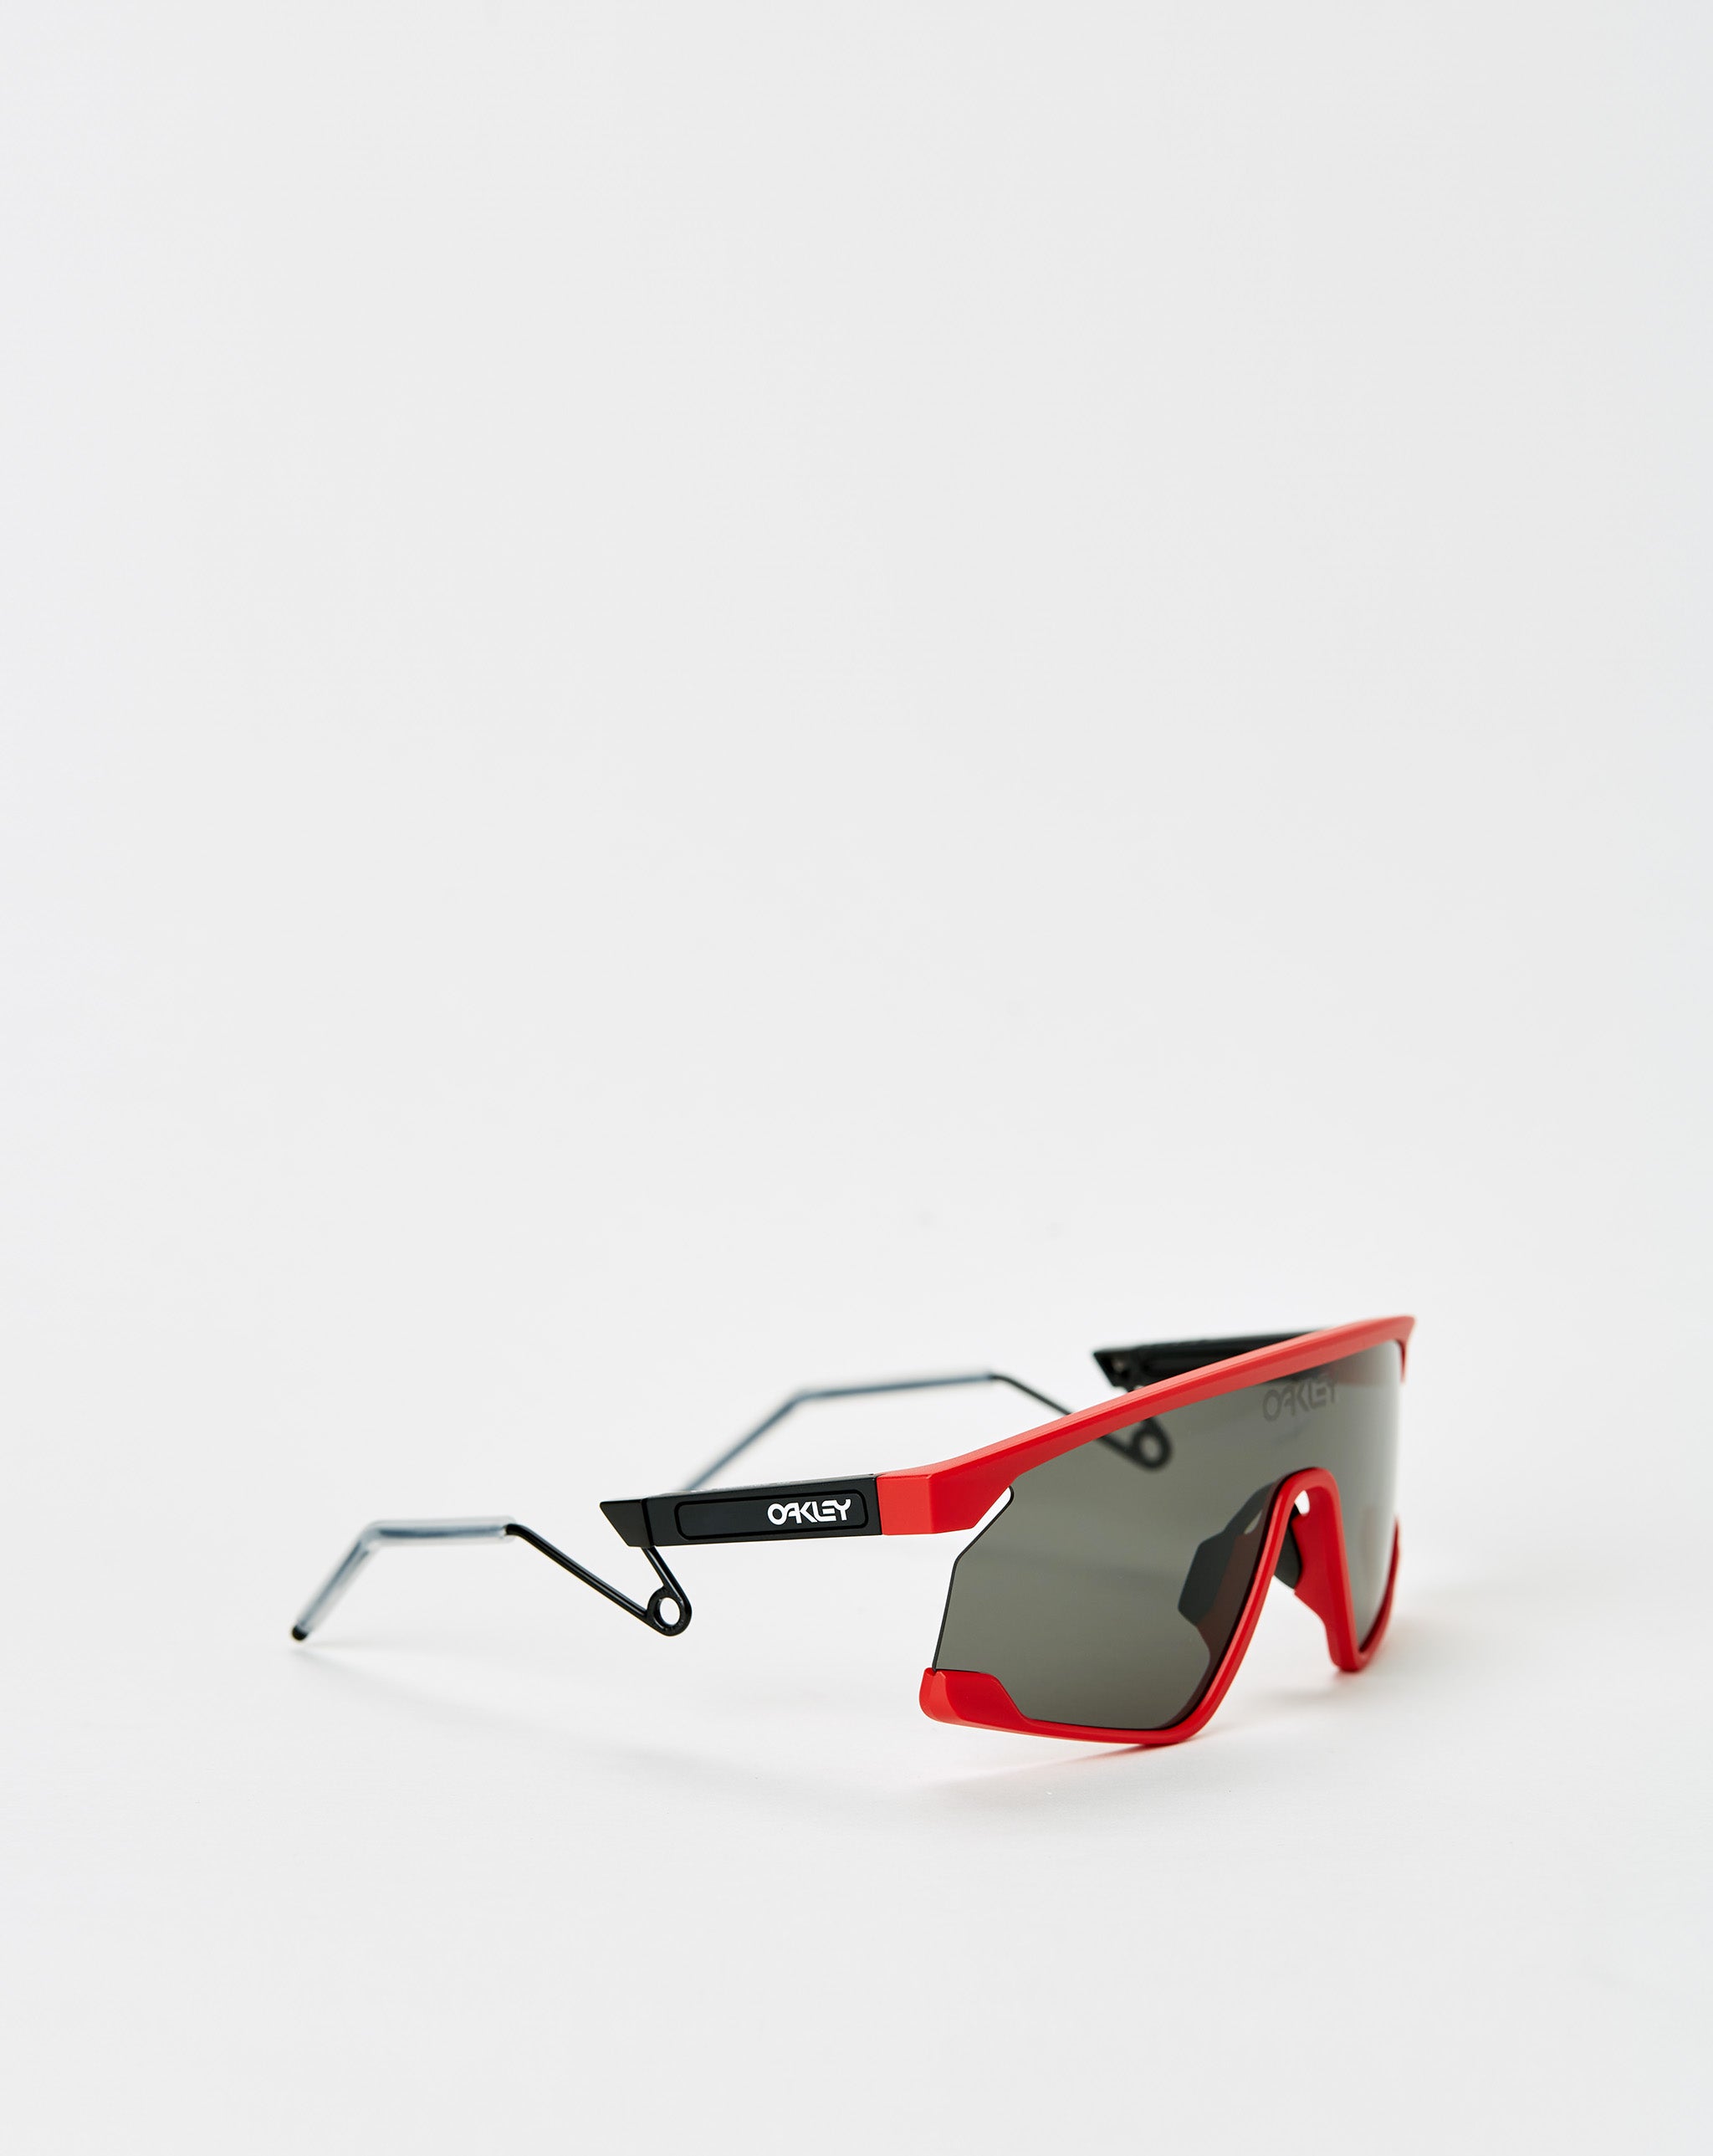 Oakley vogue eyewear brown sunglasses  - Cheap Cerbe Jordan outlet